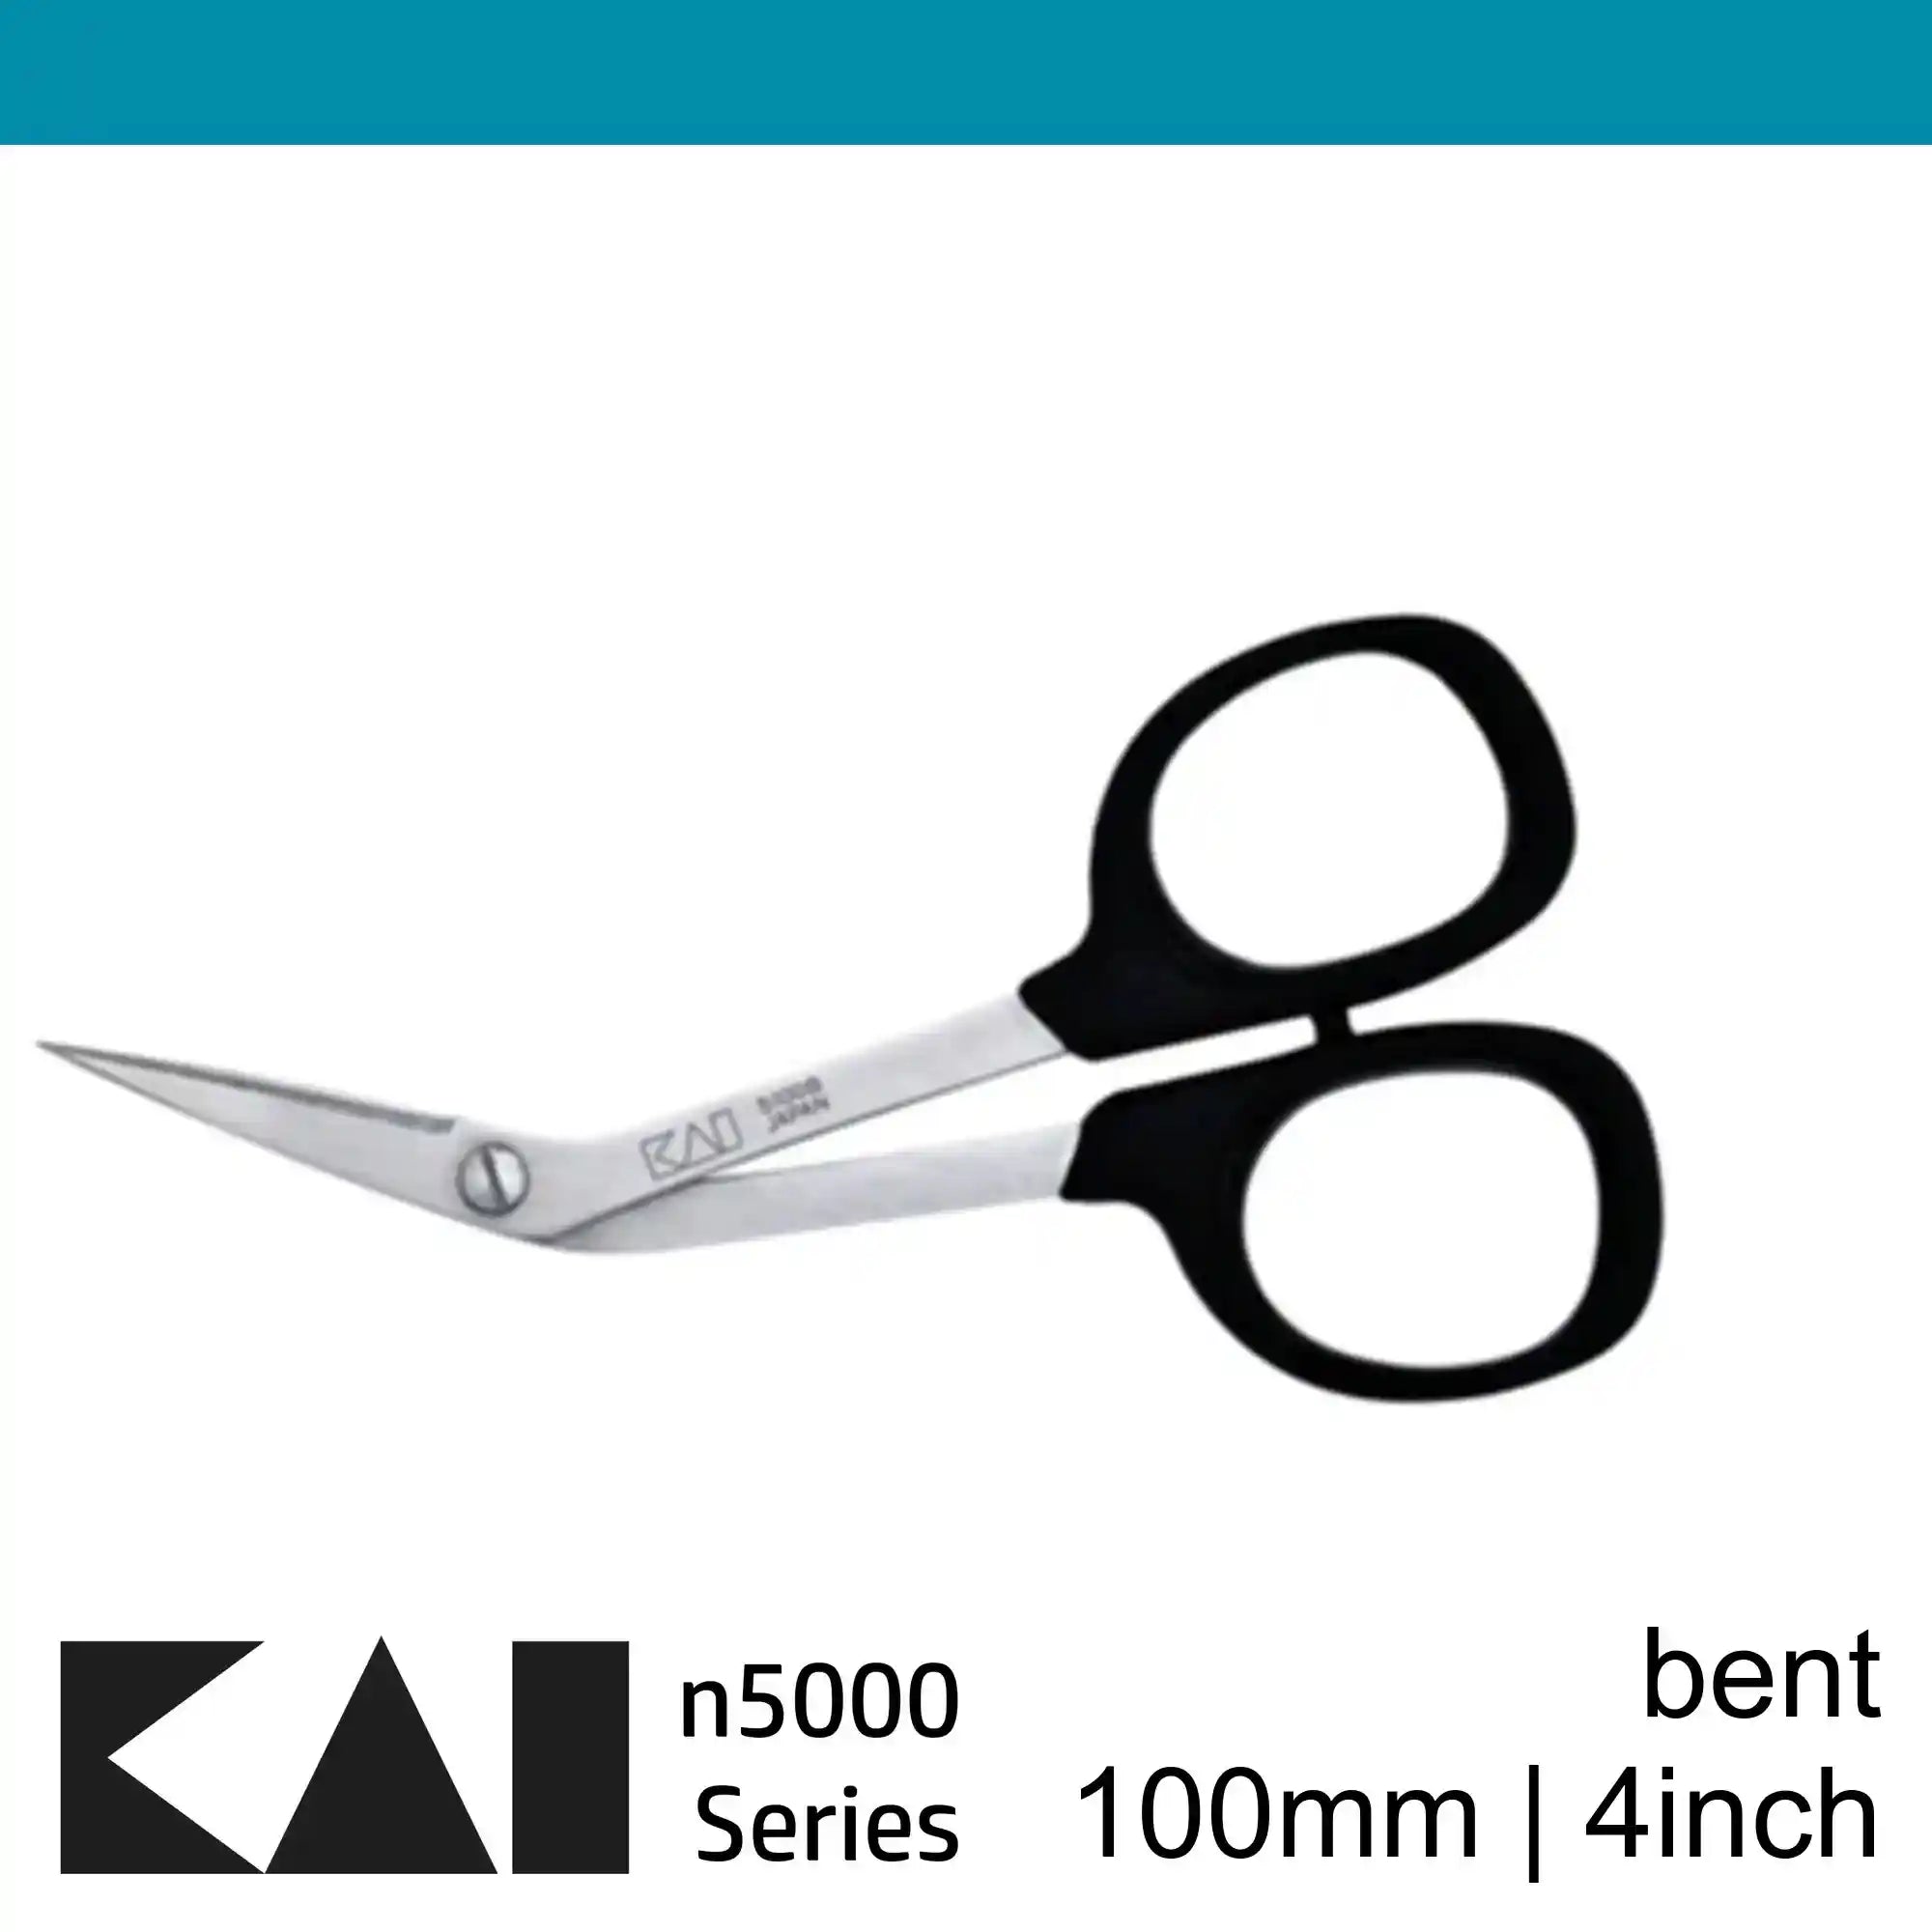 Kai 5100b Bent 4 inch 100 mm Needle Craft Scissors